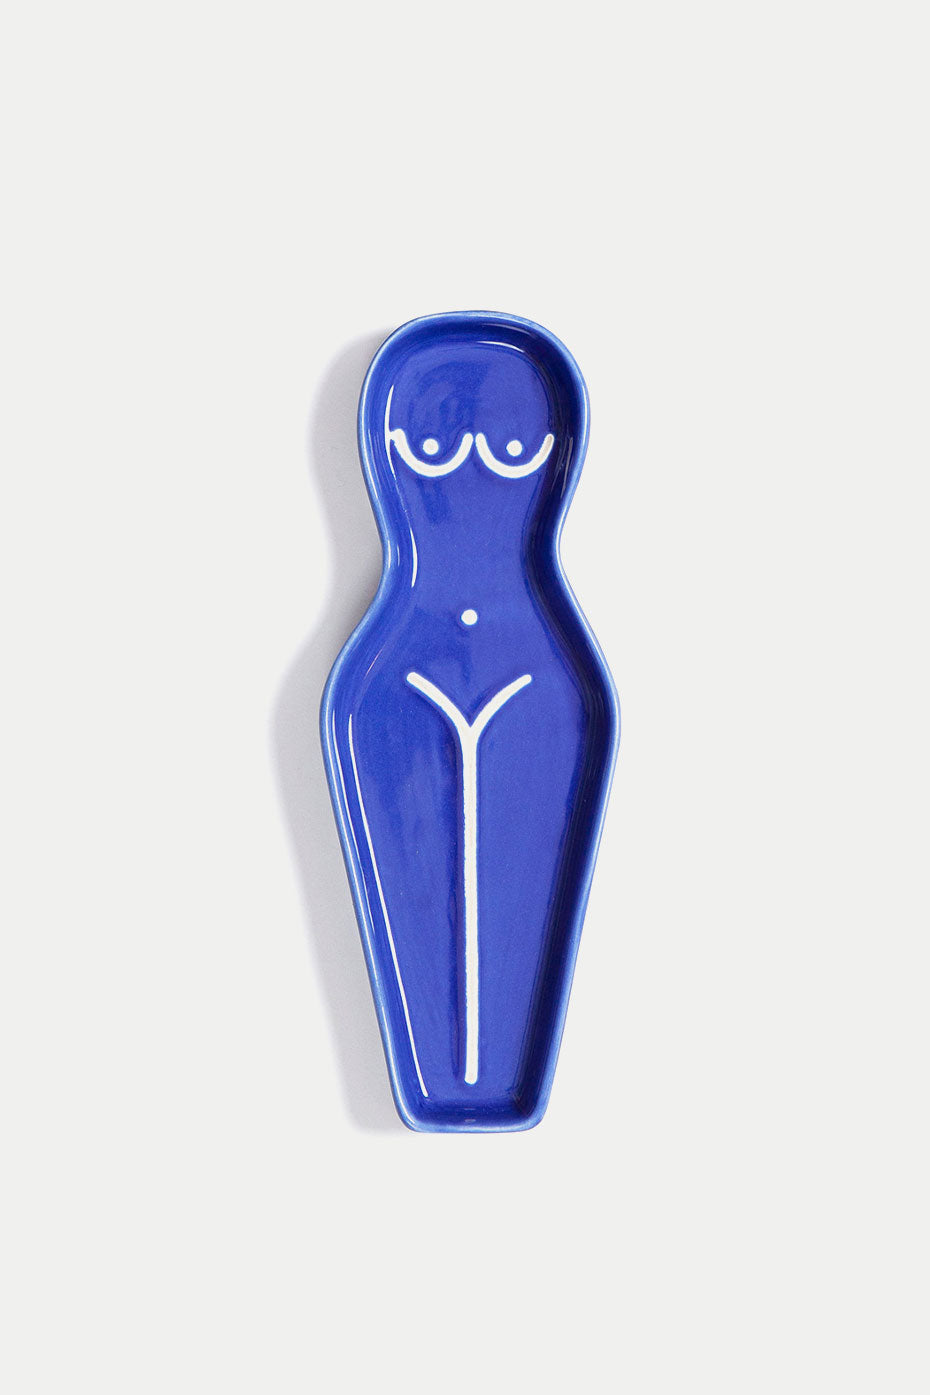 DOIY Design Blue Body Spoon Rest